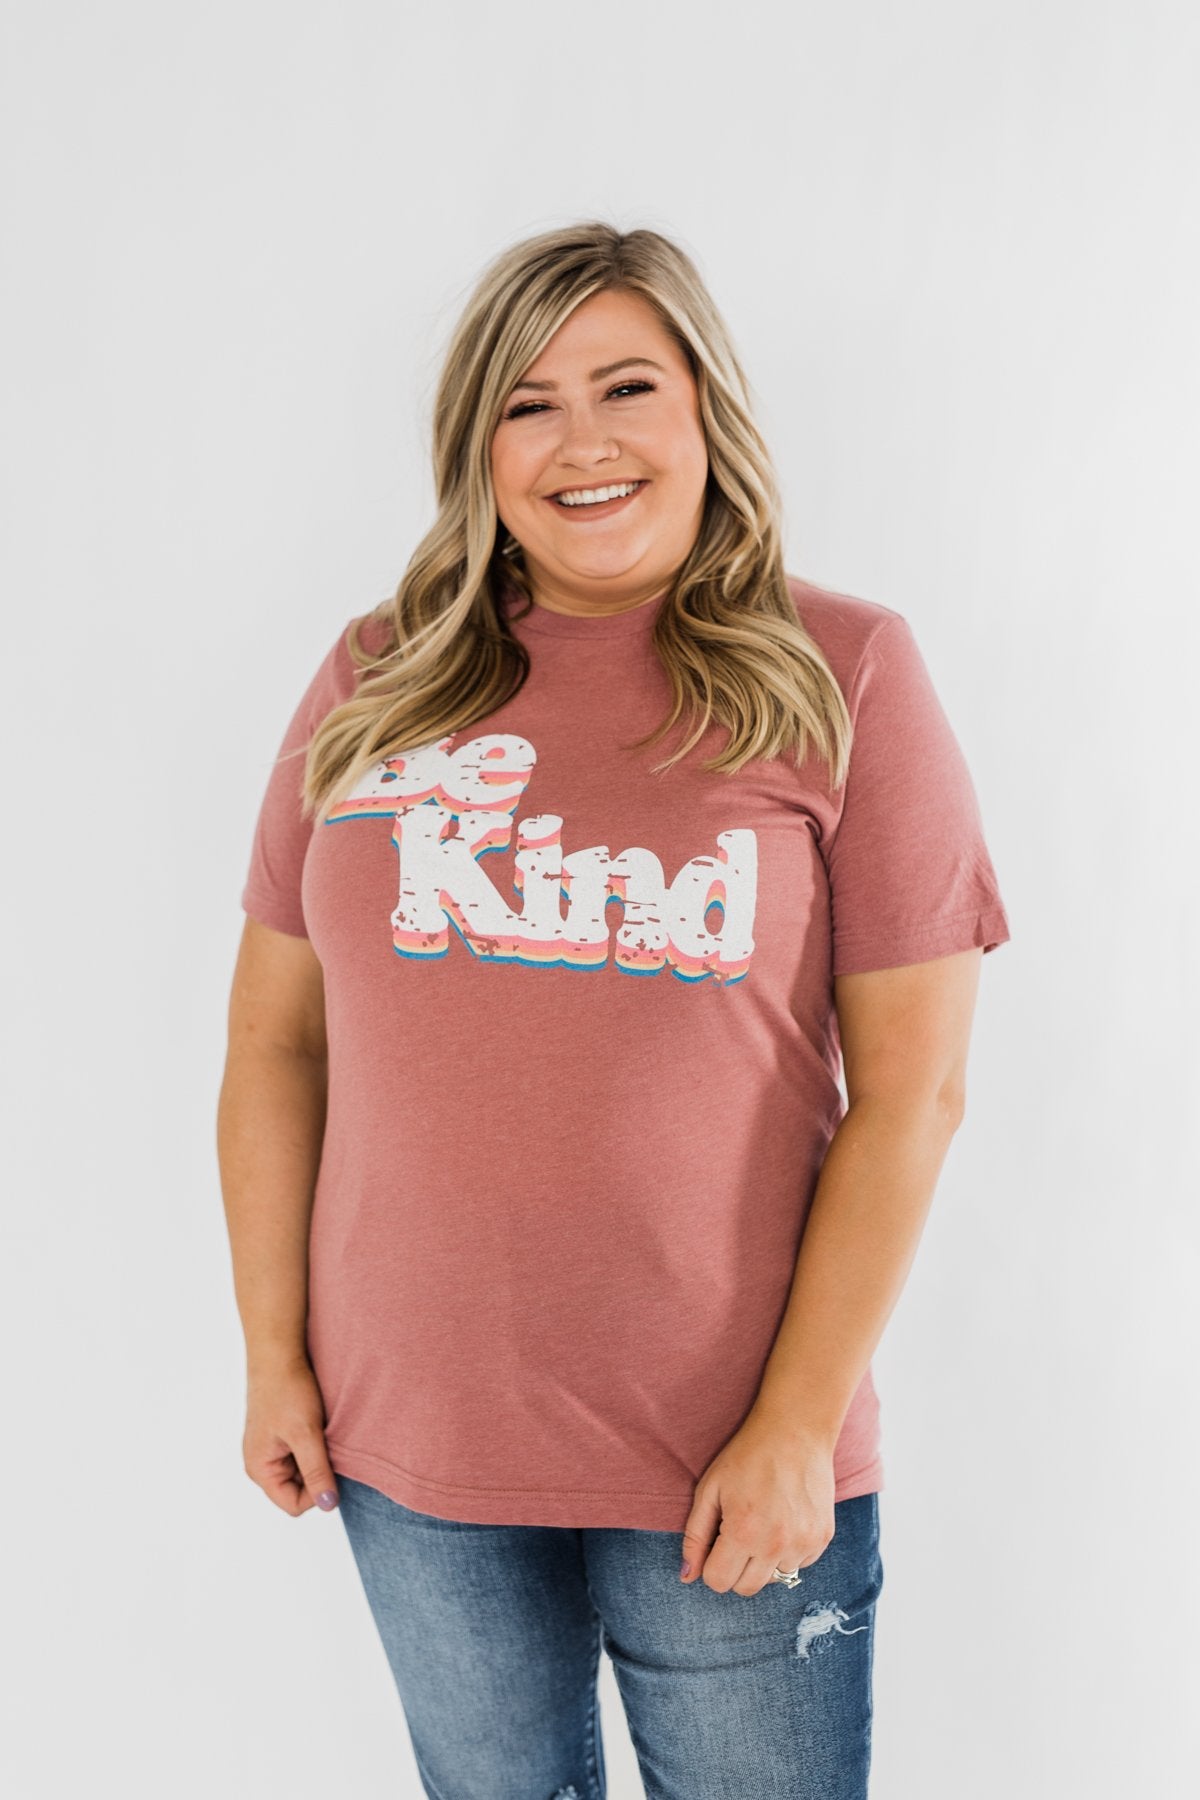 "Be Kind" Graphic Tee- Heather Mauve